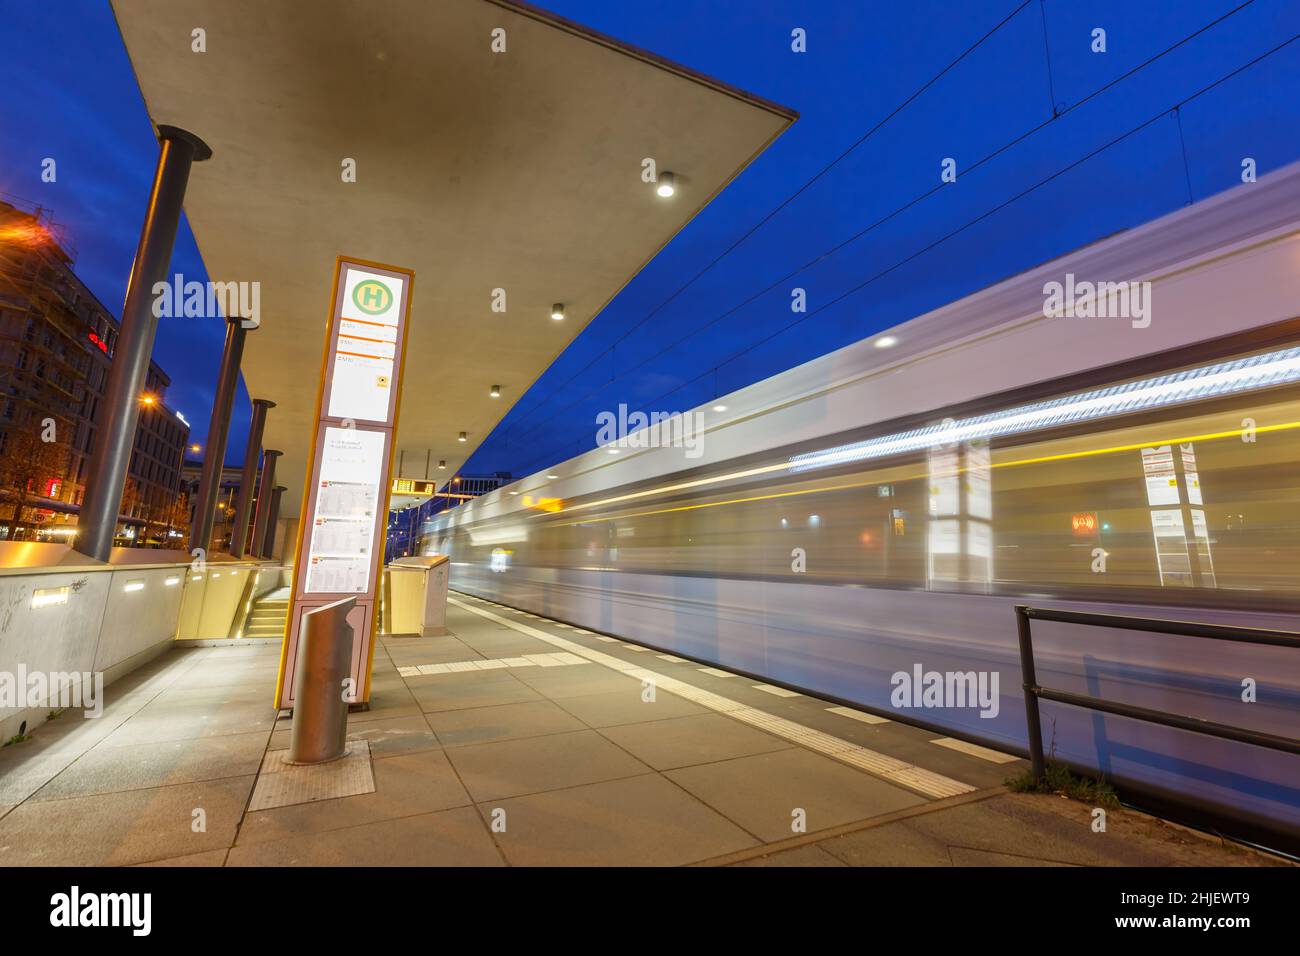 Berlin, Allemagne - 22 avril 2021 : tramway (train léger), transports en commun Hauptbahnhof, gare centrale de Berlin, Allemagne. Banque D'Images